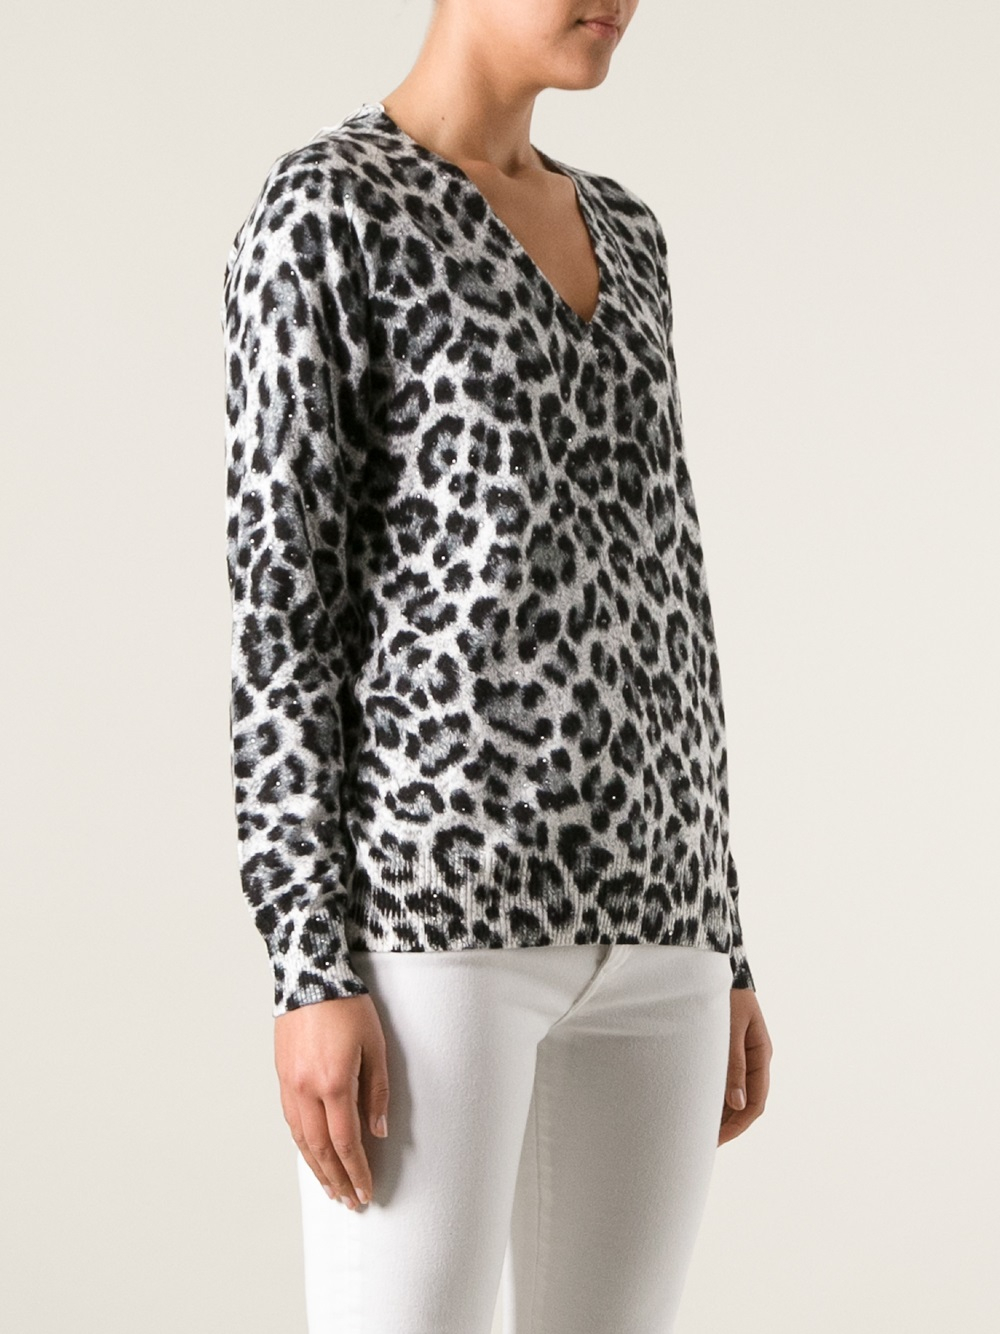 MICHAEL Michael Kors Leopard Print Sweater in Black